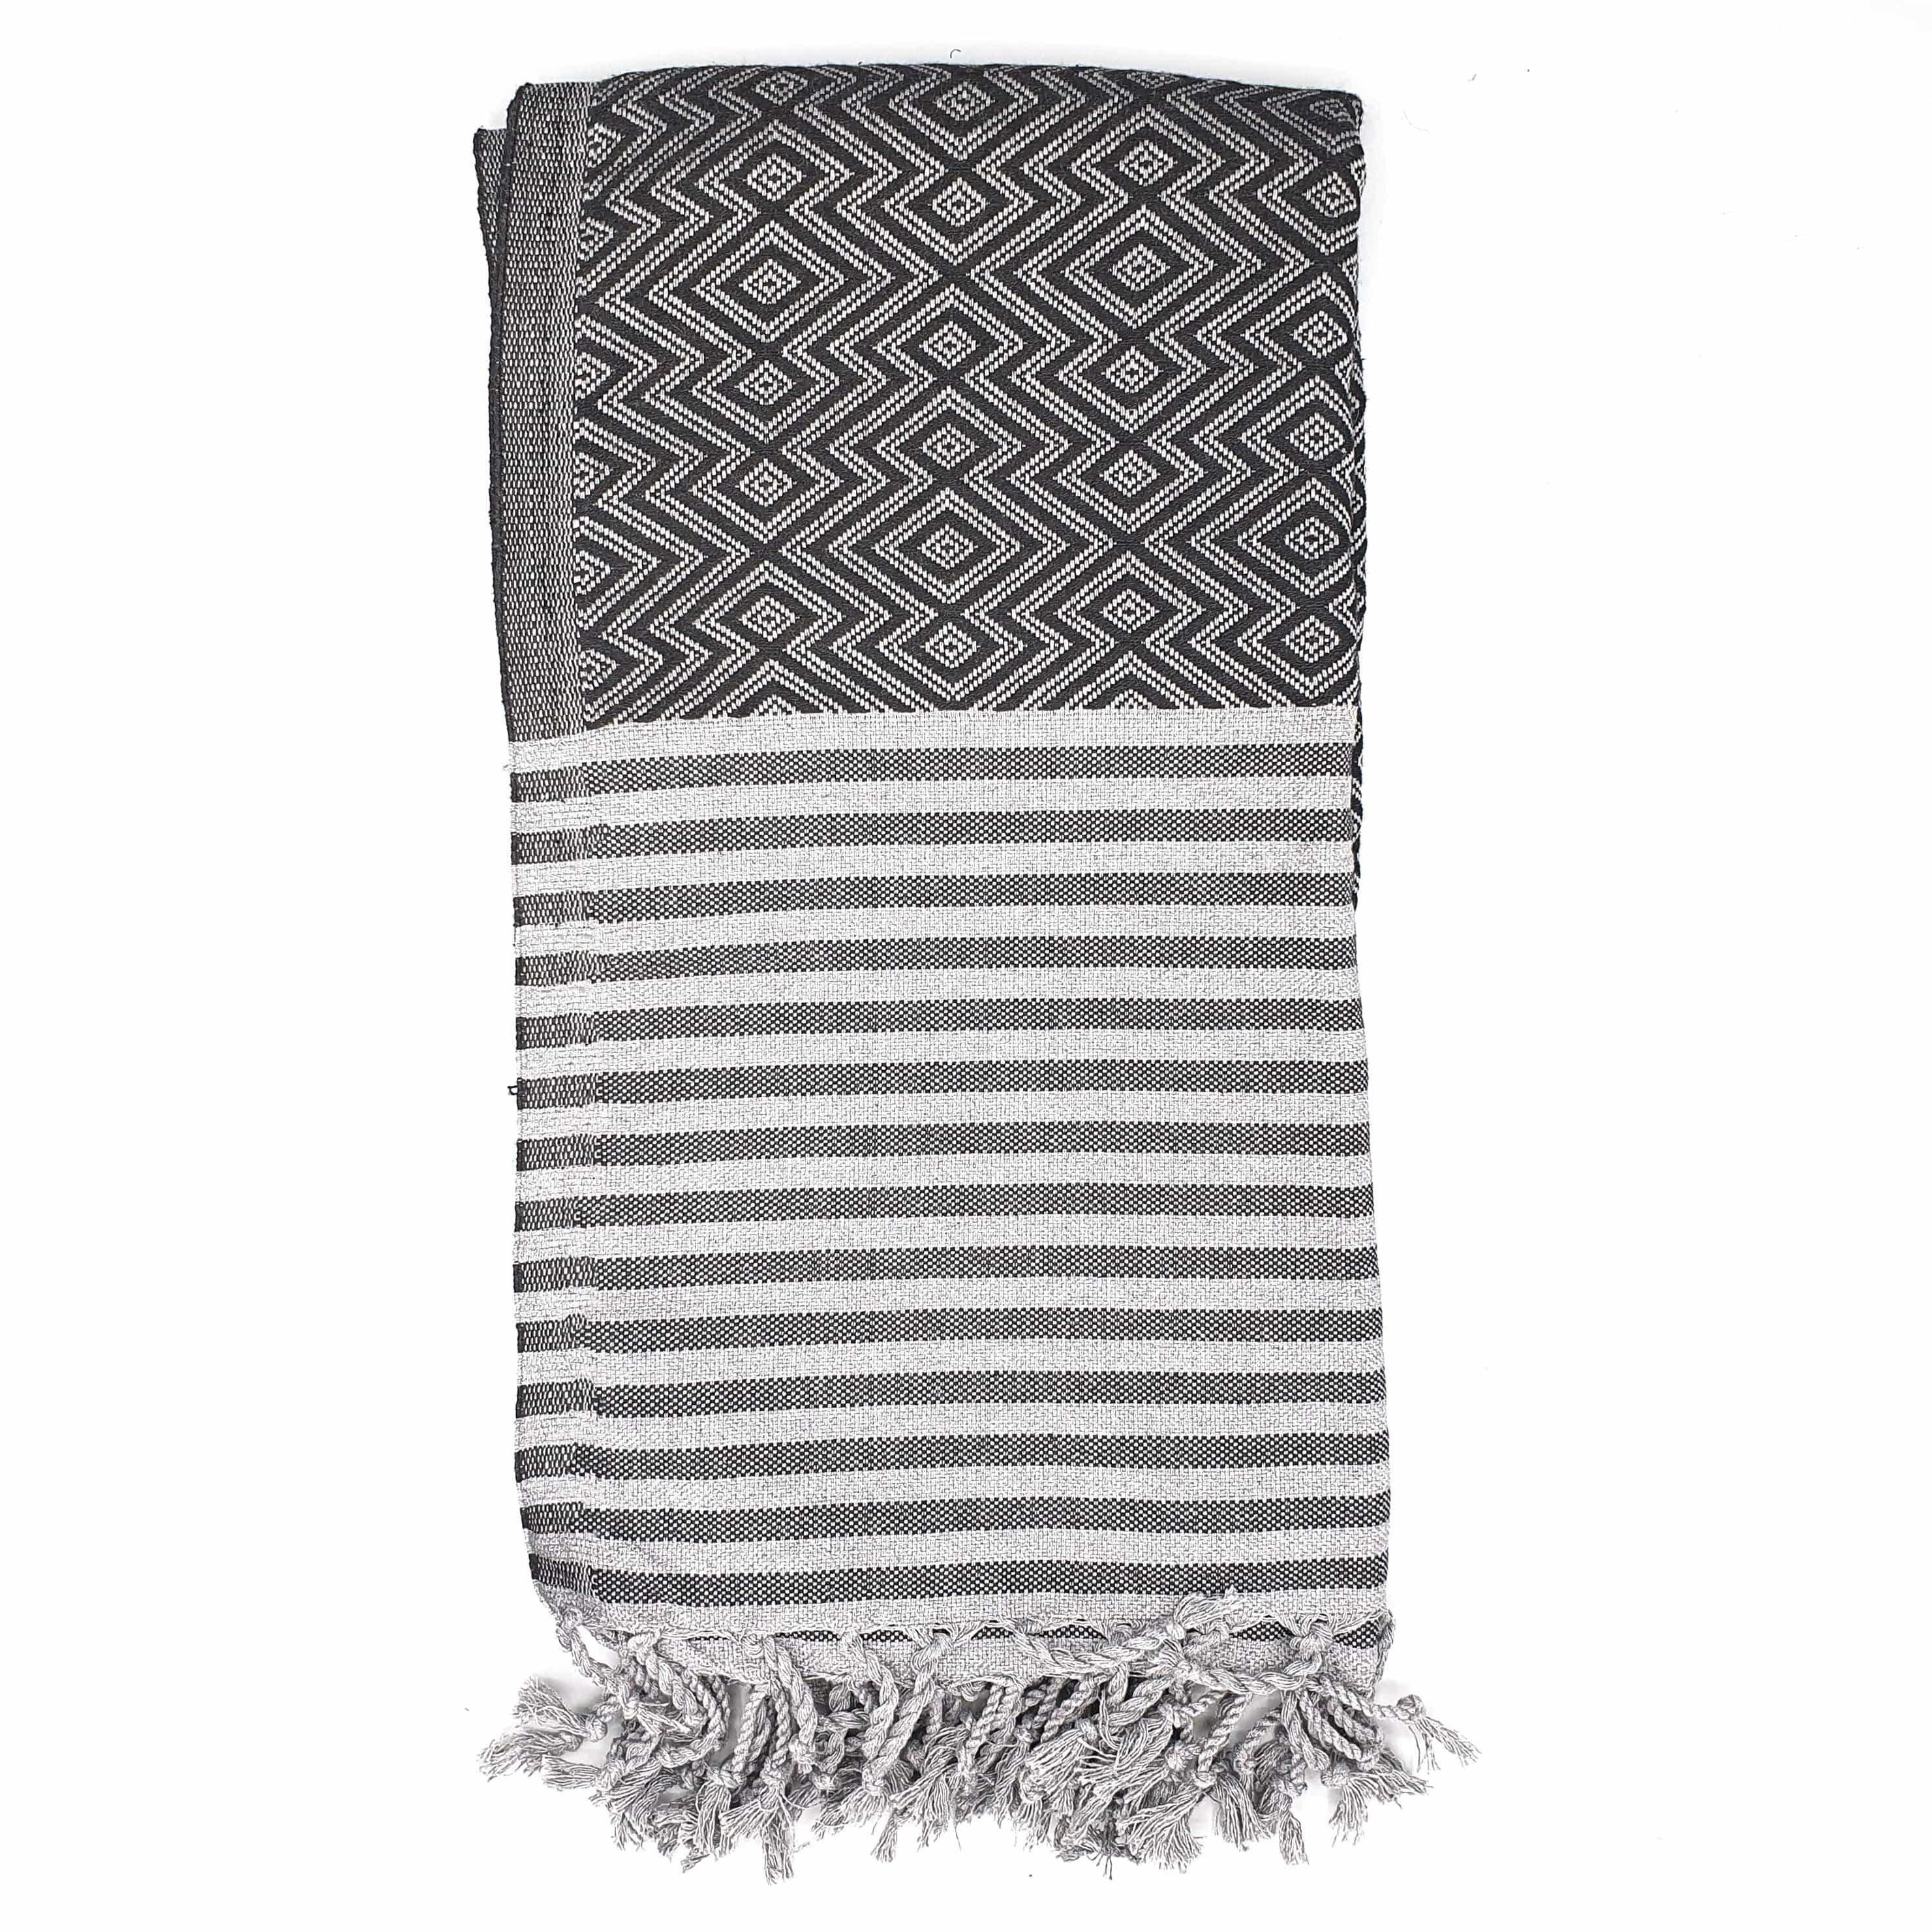 Nisa Hammam Towel, Black And Grey - image 1